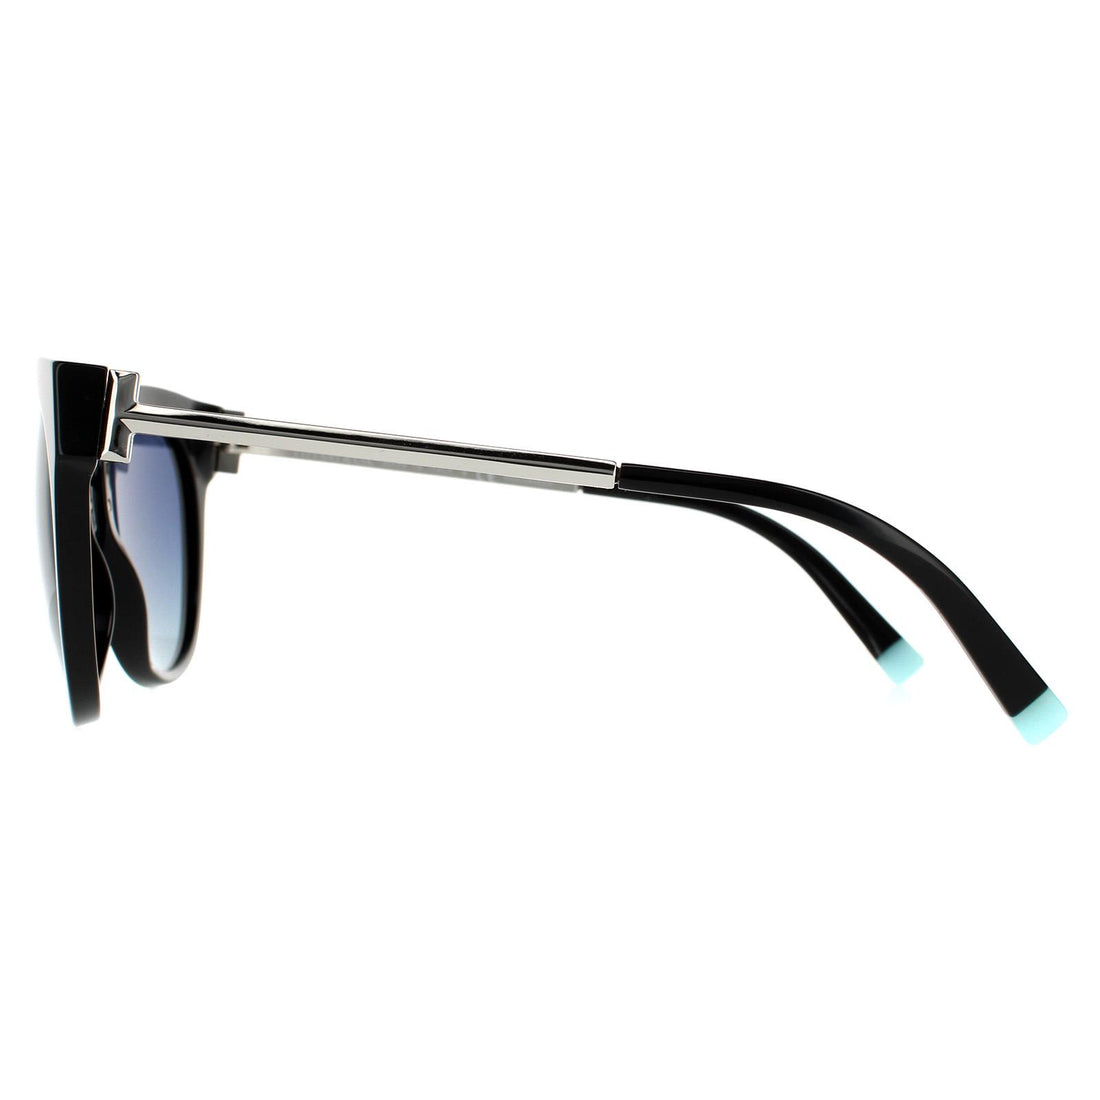 Tiffany Sunglasses TF4168 80014U Black Blue Gradient Polarized